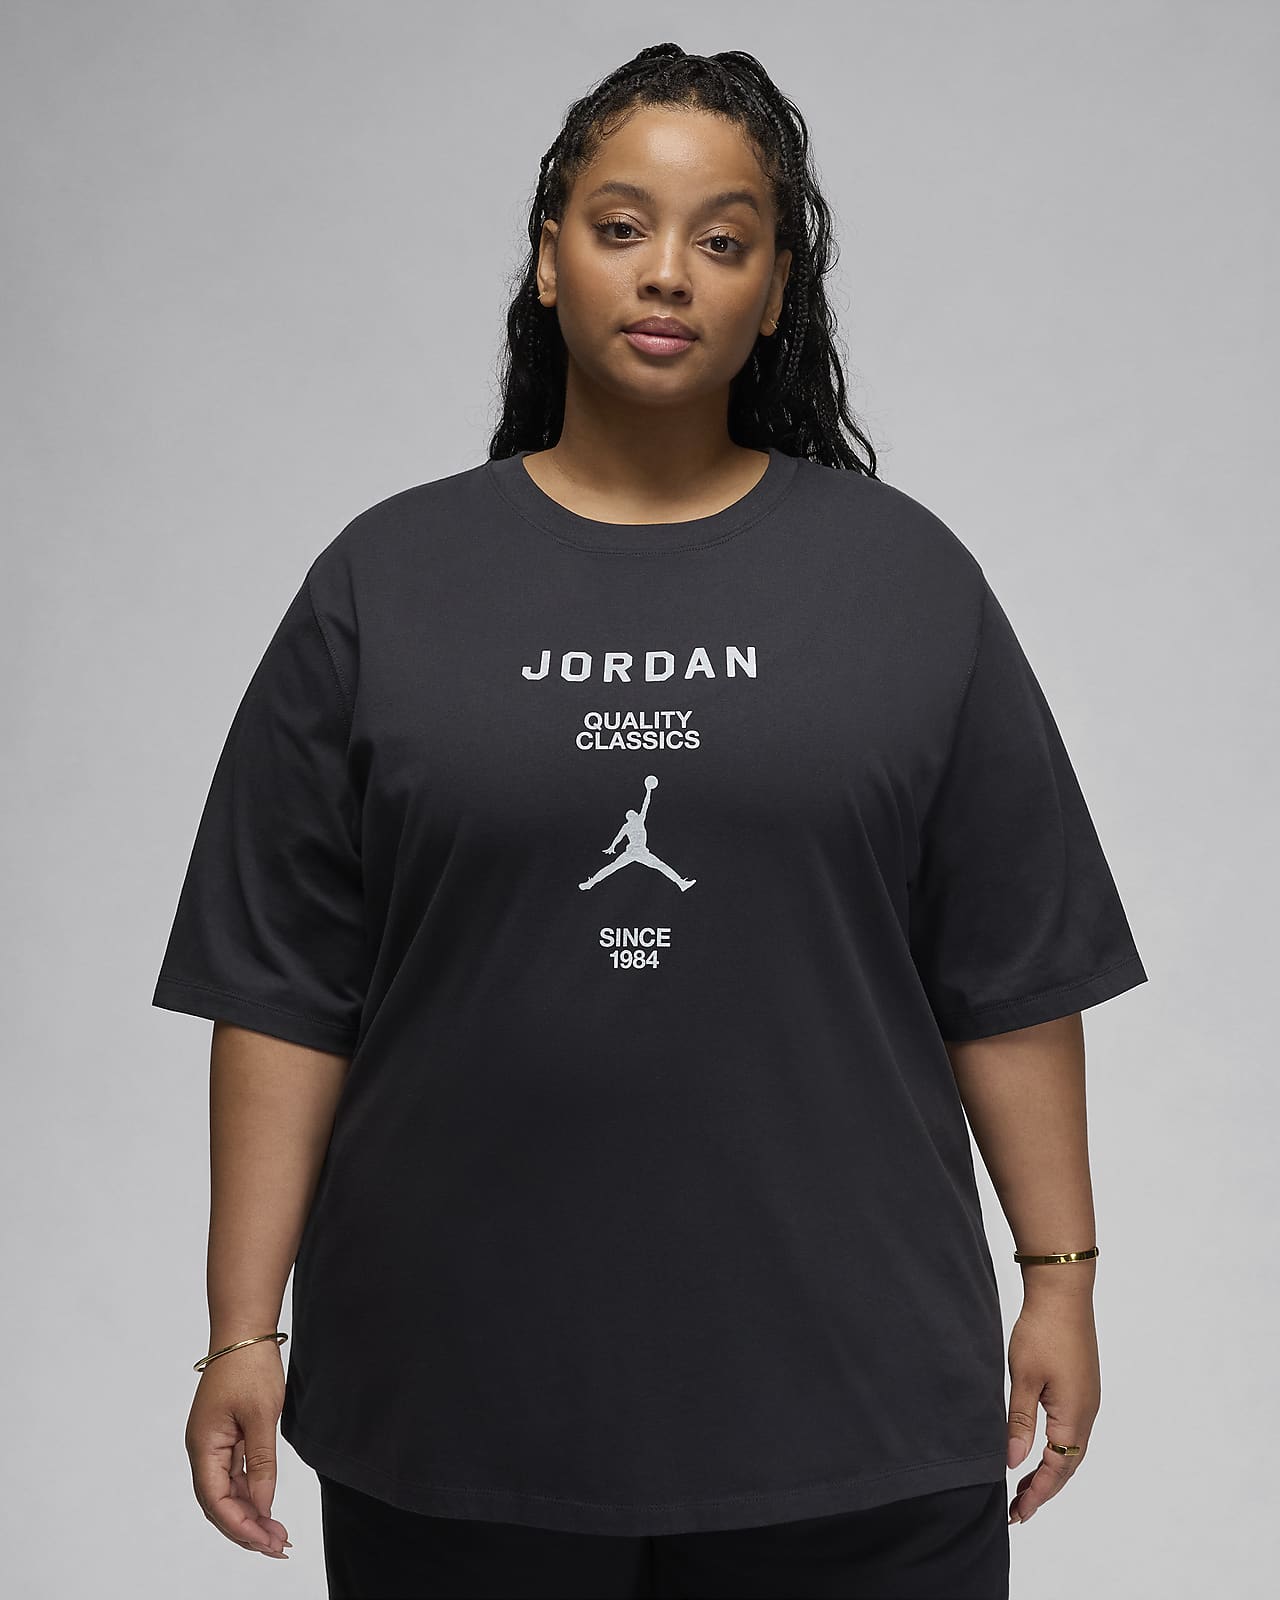 Jordan Women's Girlfriend T-Shirt (Plus Size)